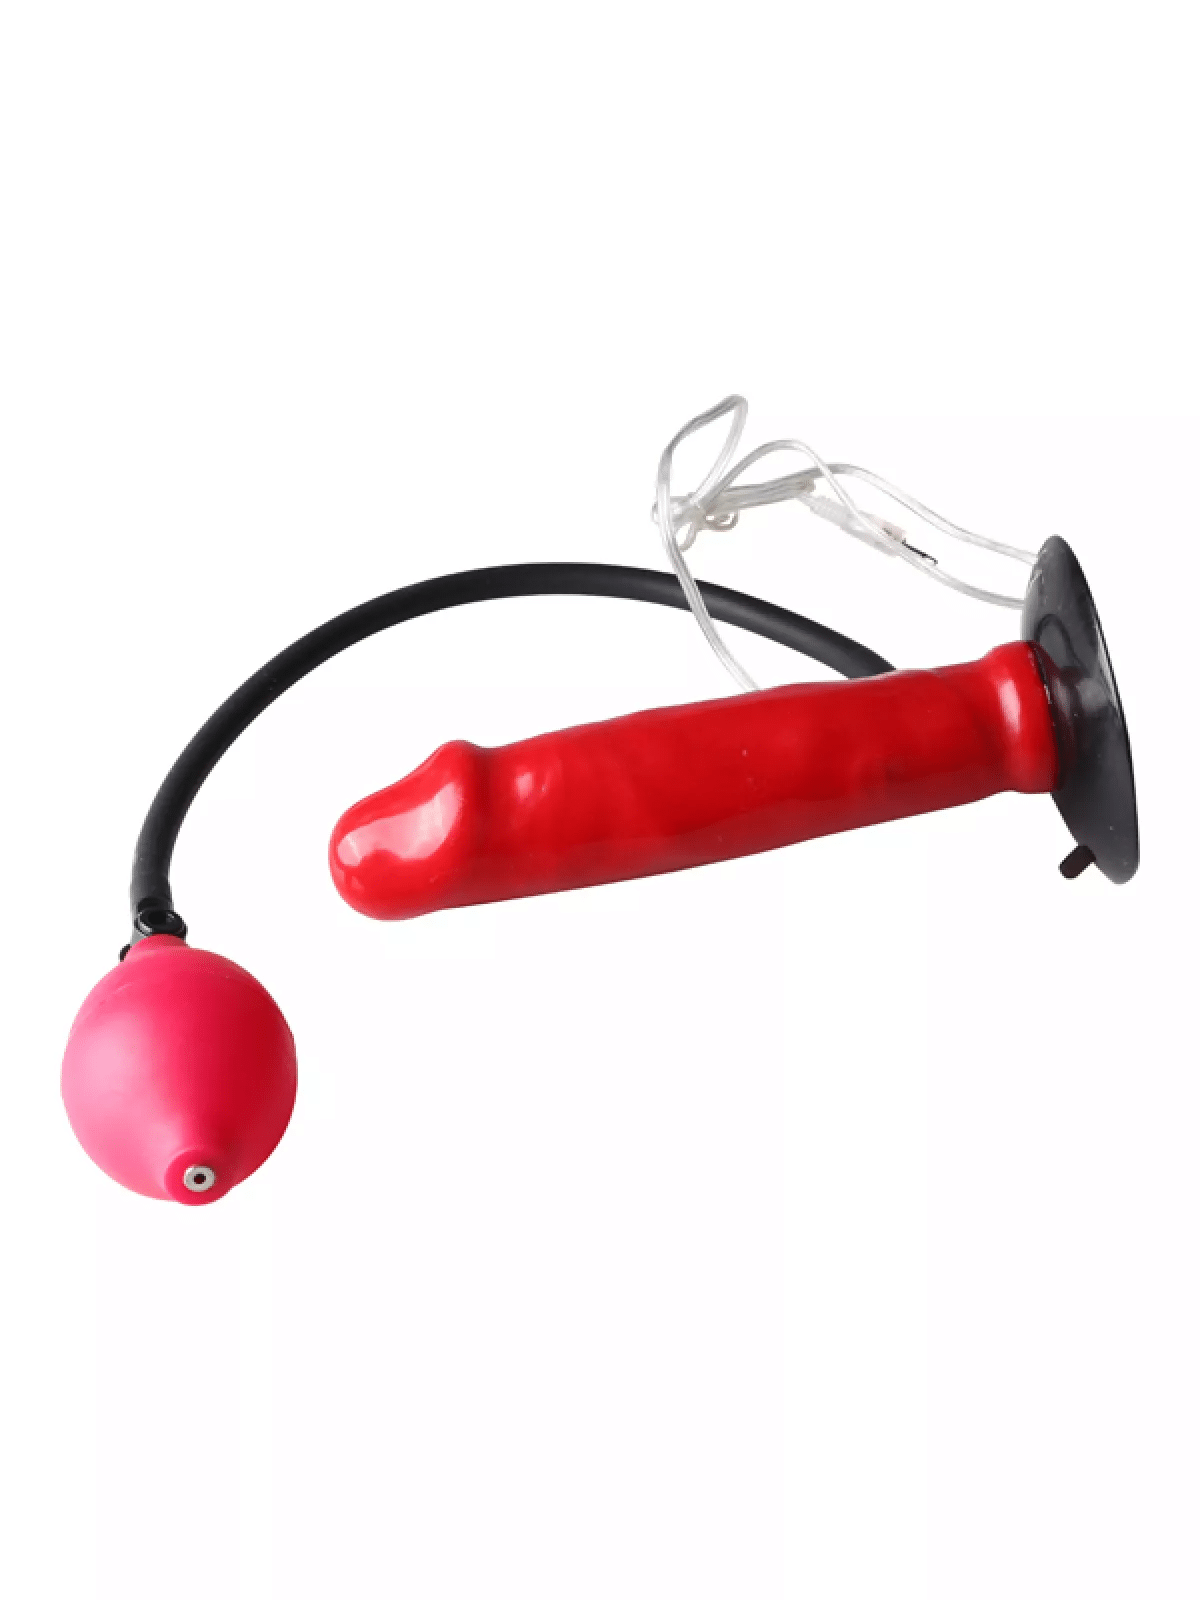 Aufblasbarer Vibrator - Red Balloon features